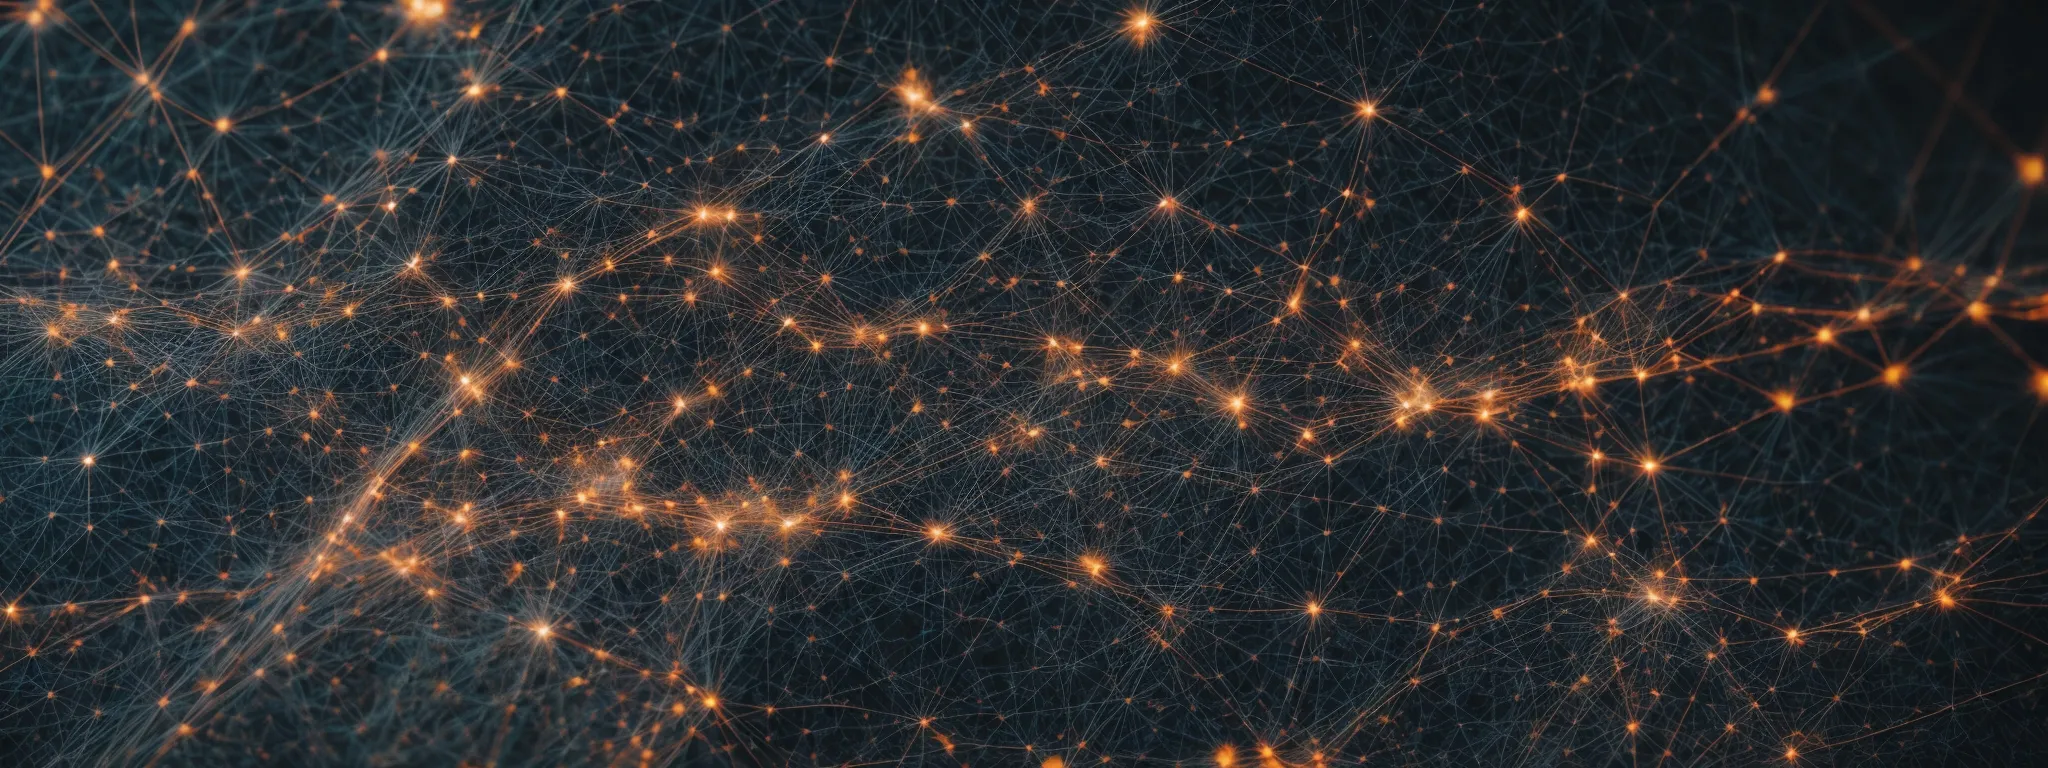 a strategist marks potential partner websites on a digital map of interconnected nodes representing the internet's vast network.